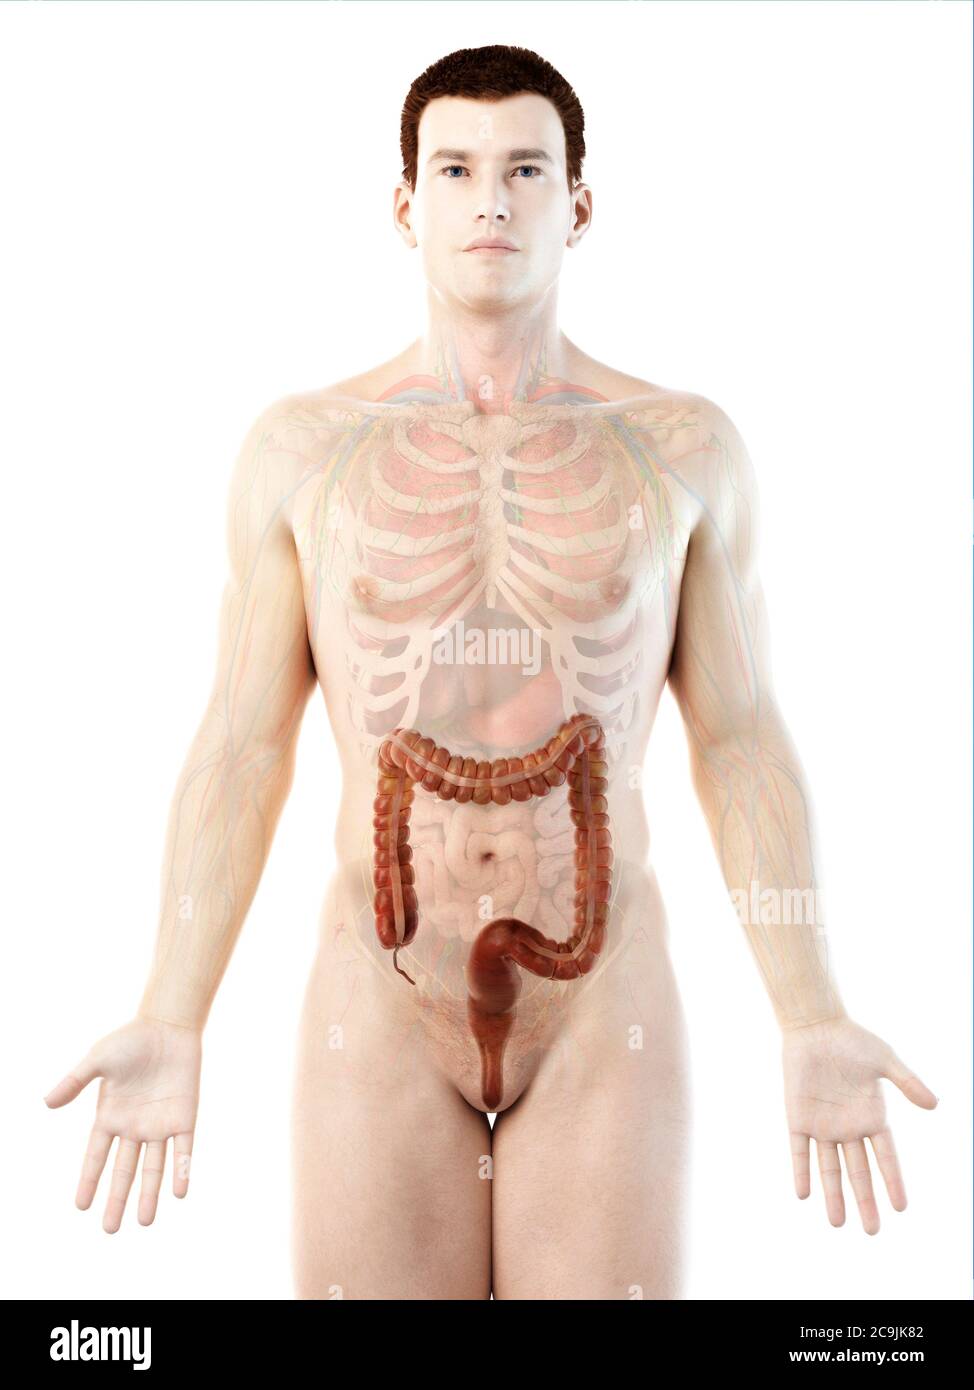 Large intestine, computer illustration. Stock Photo